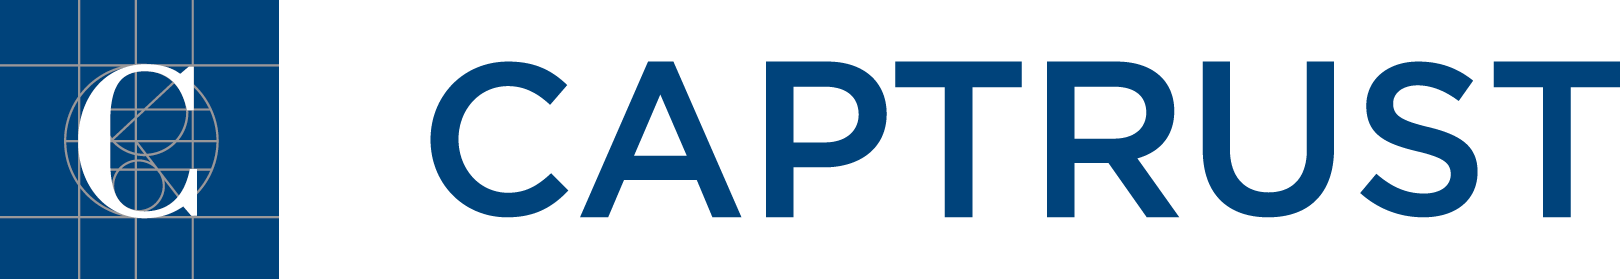 CAPTRUST Logo